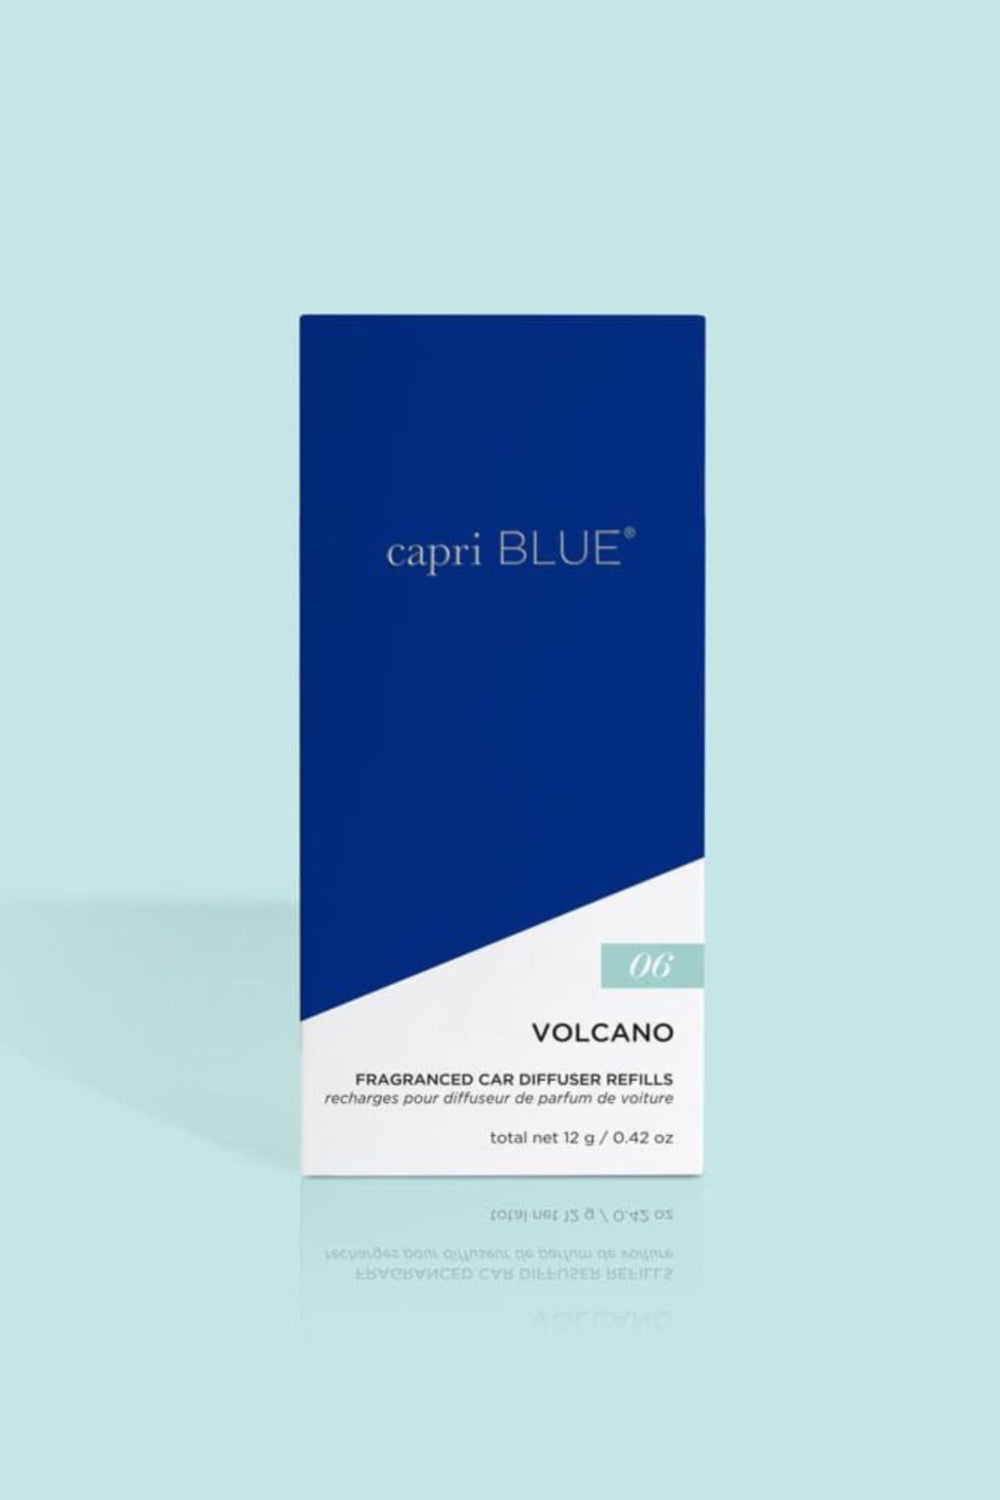 Capri Blue: Volcano Fragranced Car Diffuser Refills | Makk Fashions